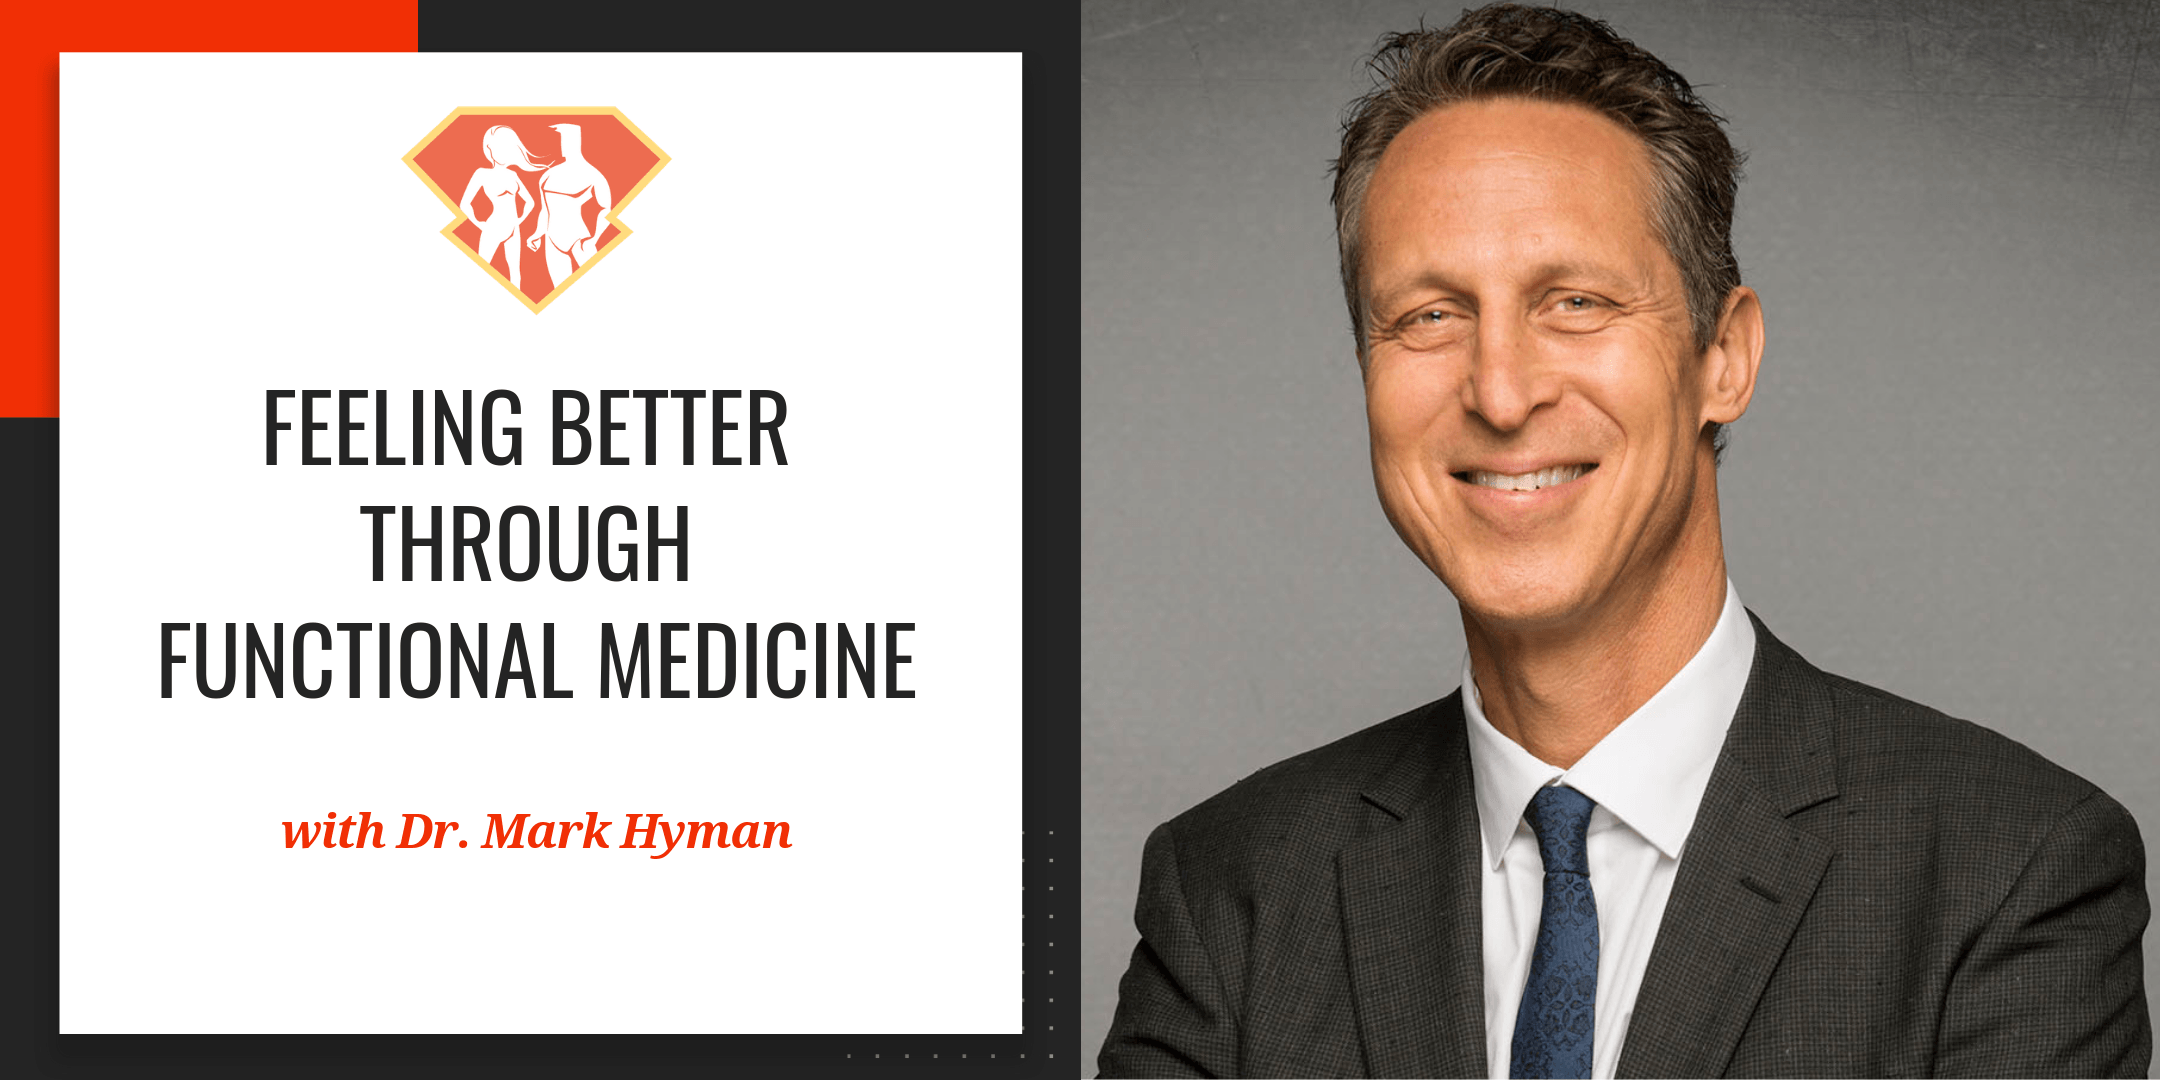 Dr. Mark Hyman on Feeling Better Through Functional Medicine